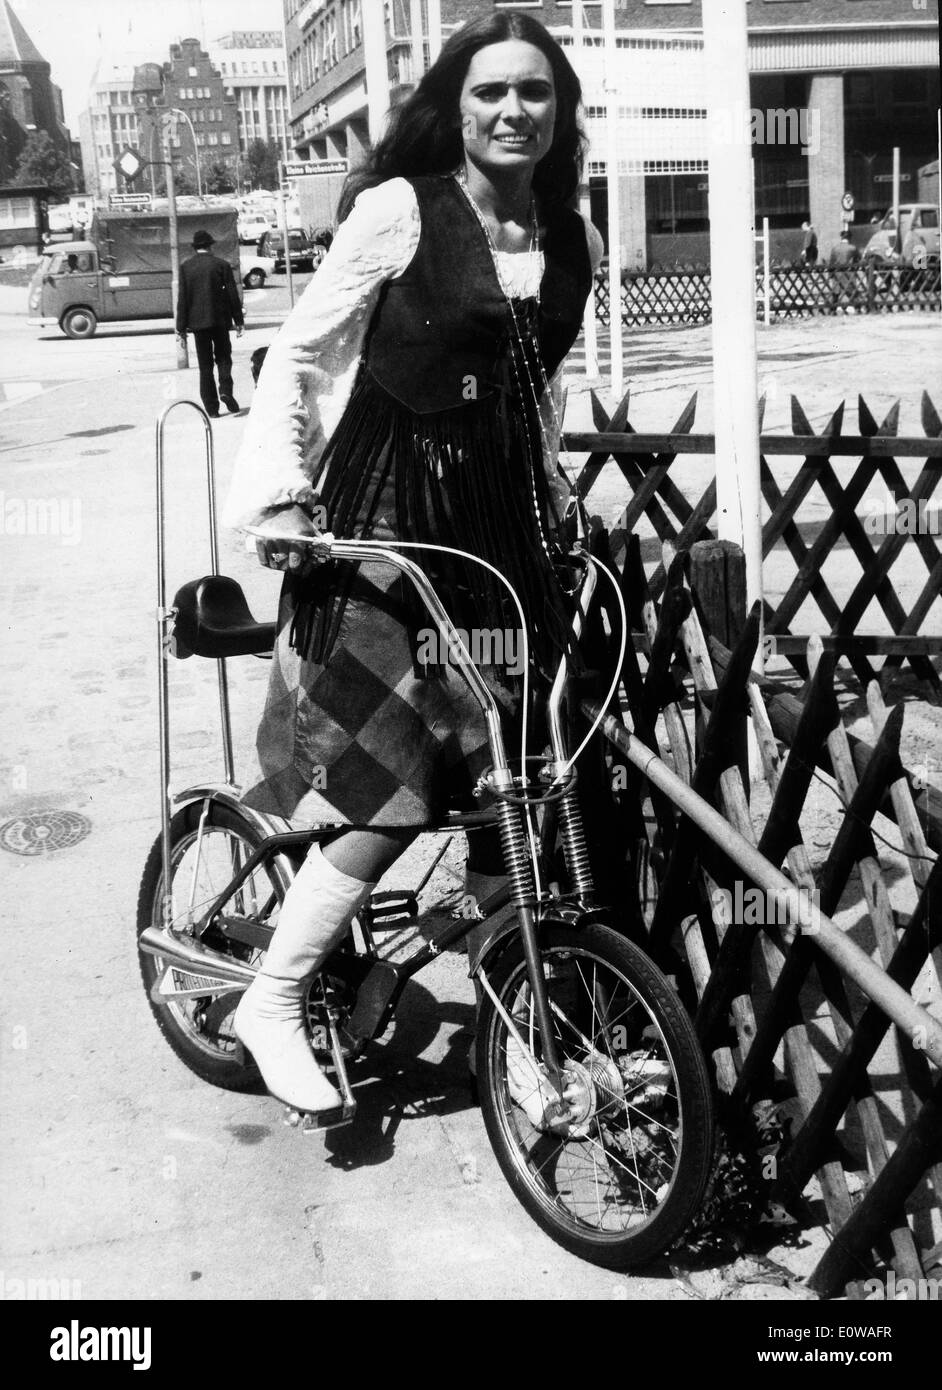 Actress Daliah Lavi rides a bike Stock Photo